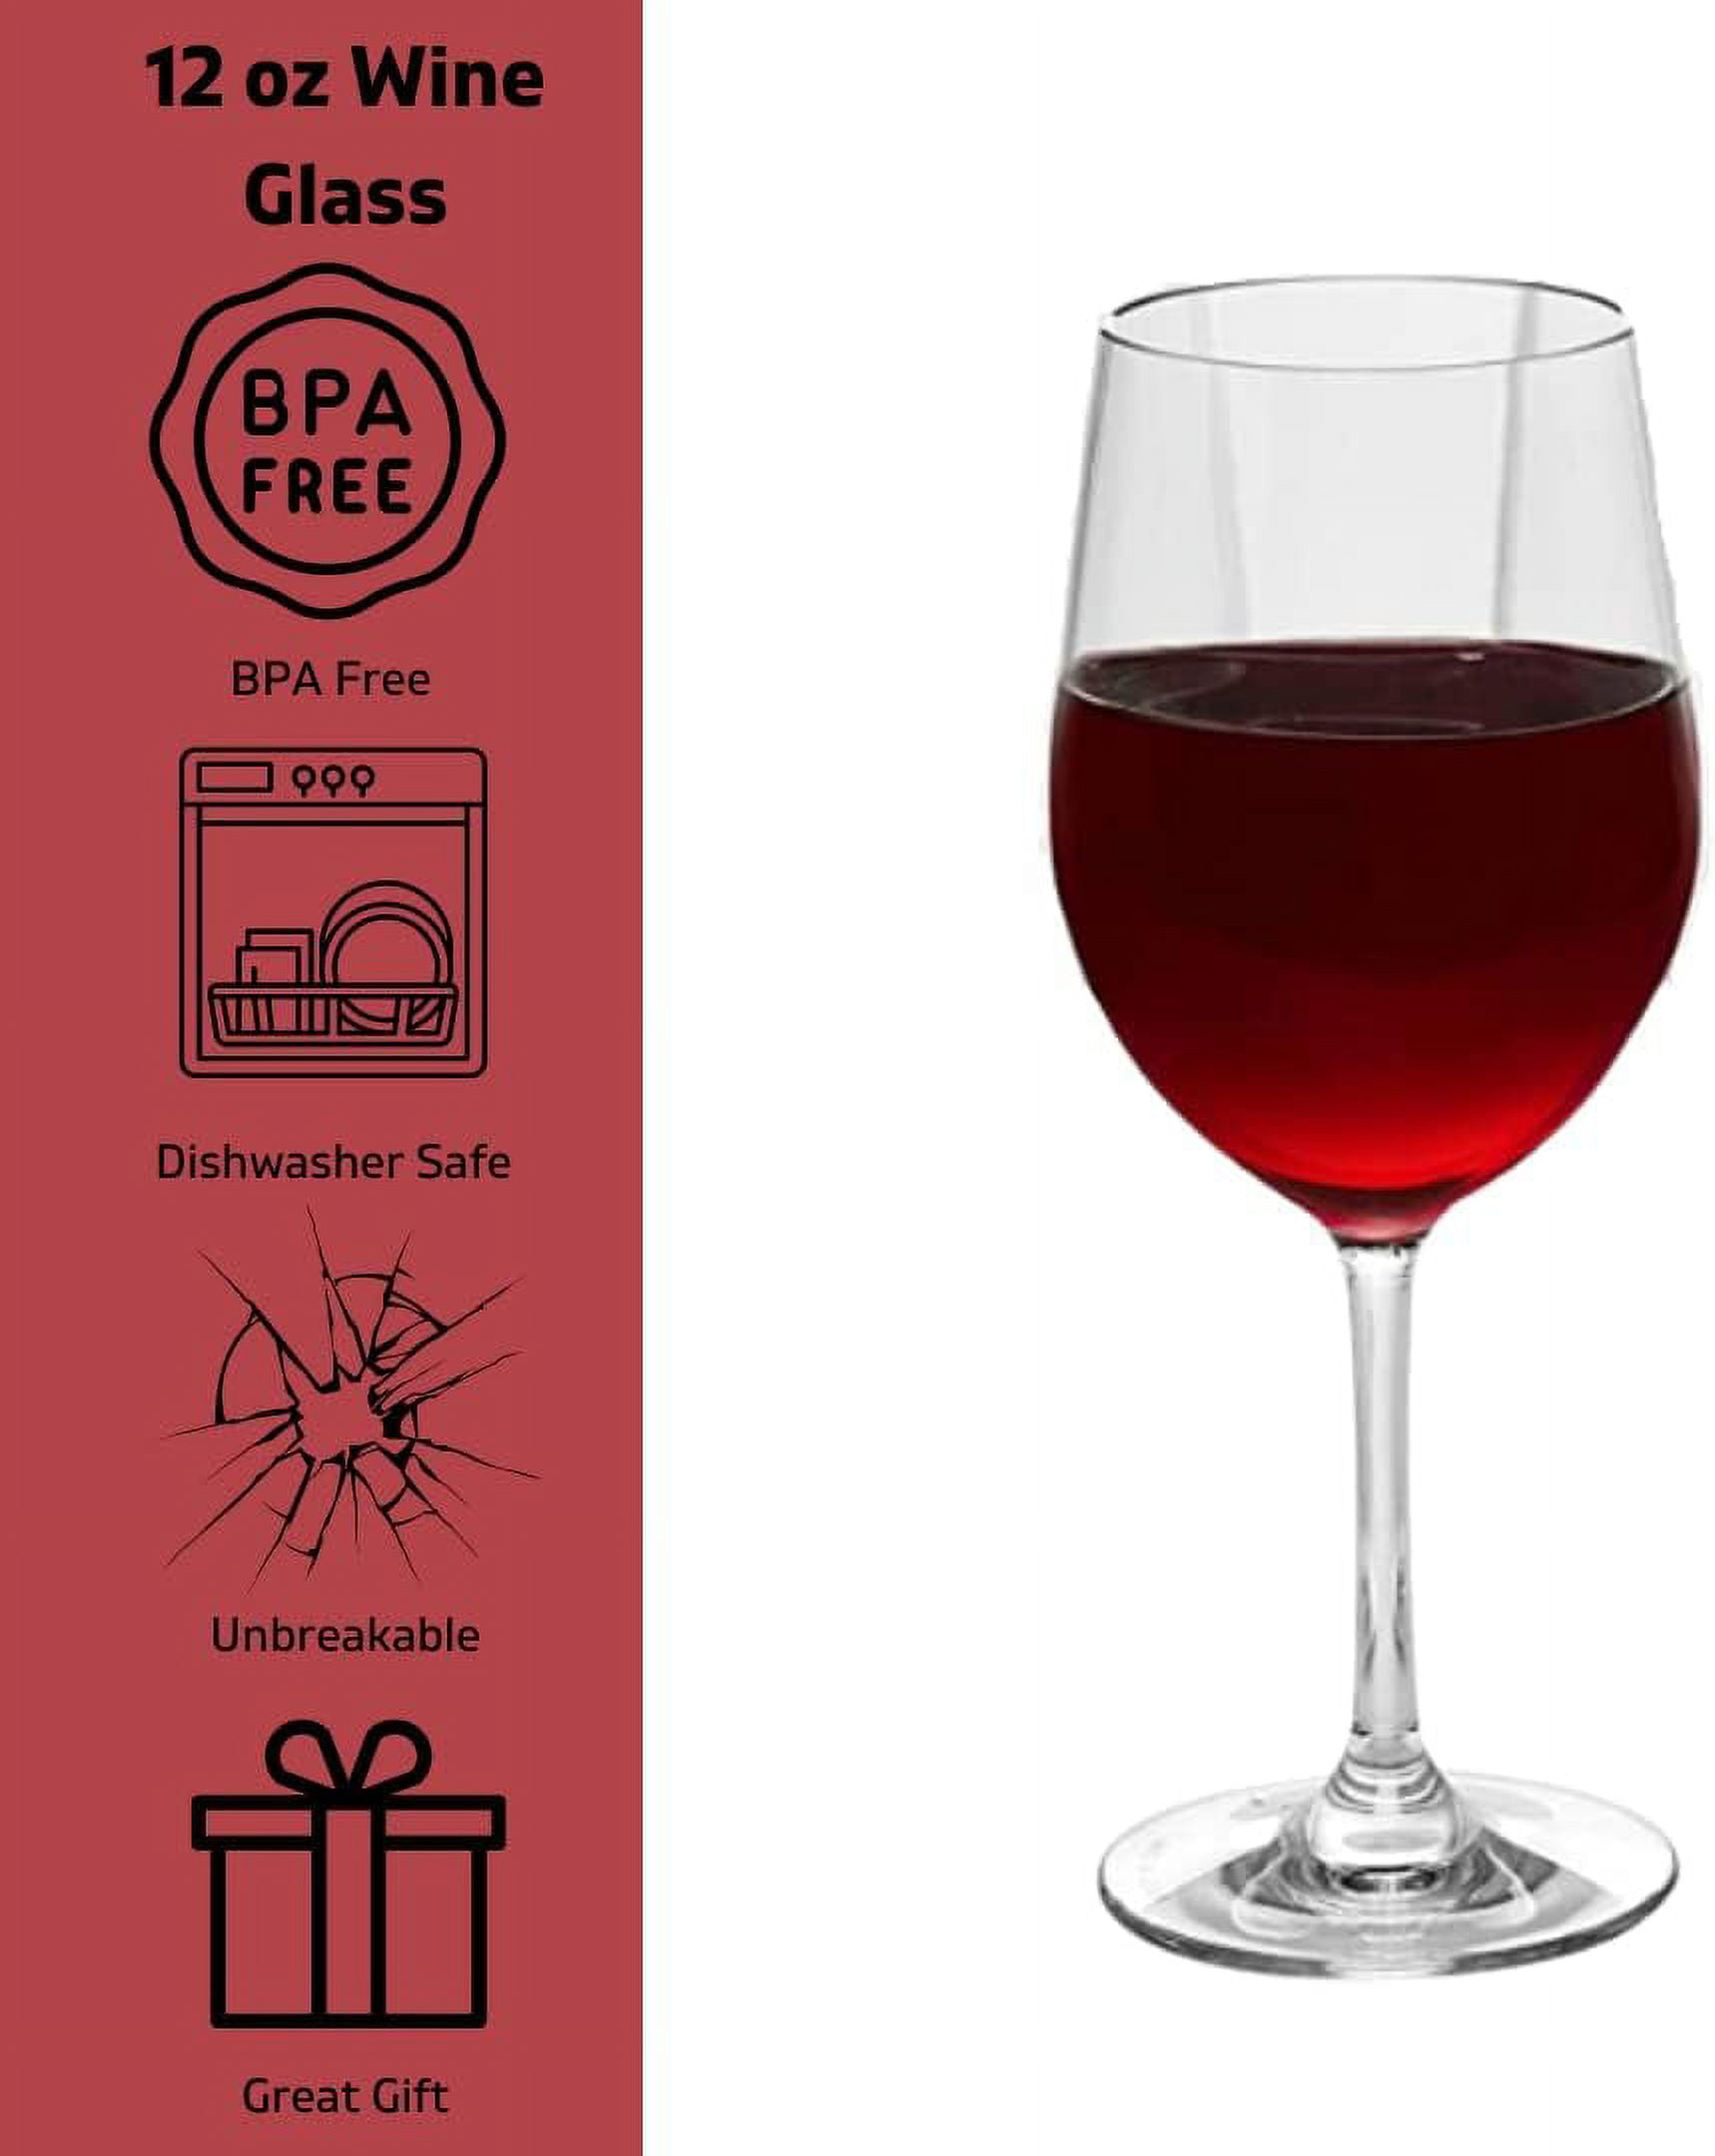 Shatterproof Tritan Stemmed Fancy Wine Glasses Goblets, Resalable | 4 Set |  Bright Colors Glass Look…See more Shatterproof Tritan Stemmed Fancy Wine